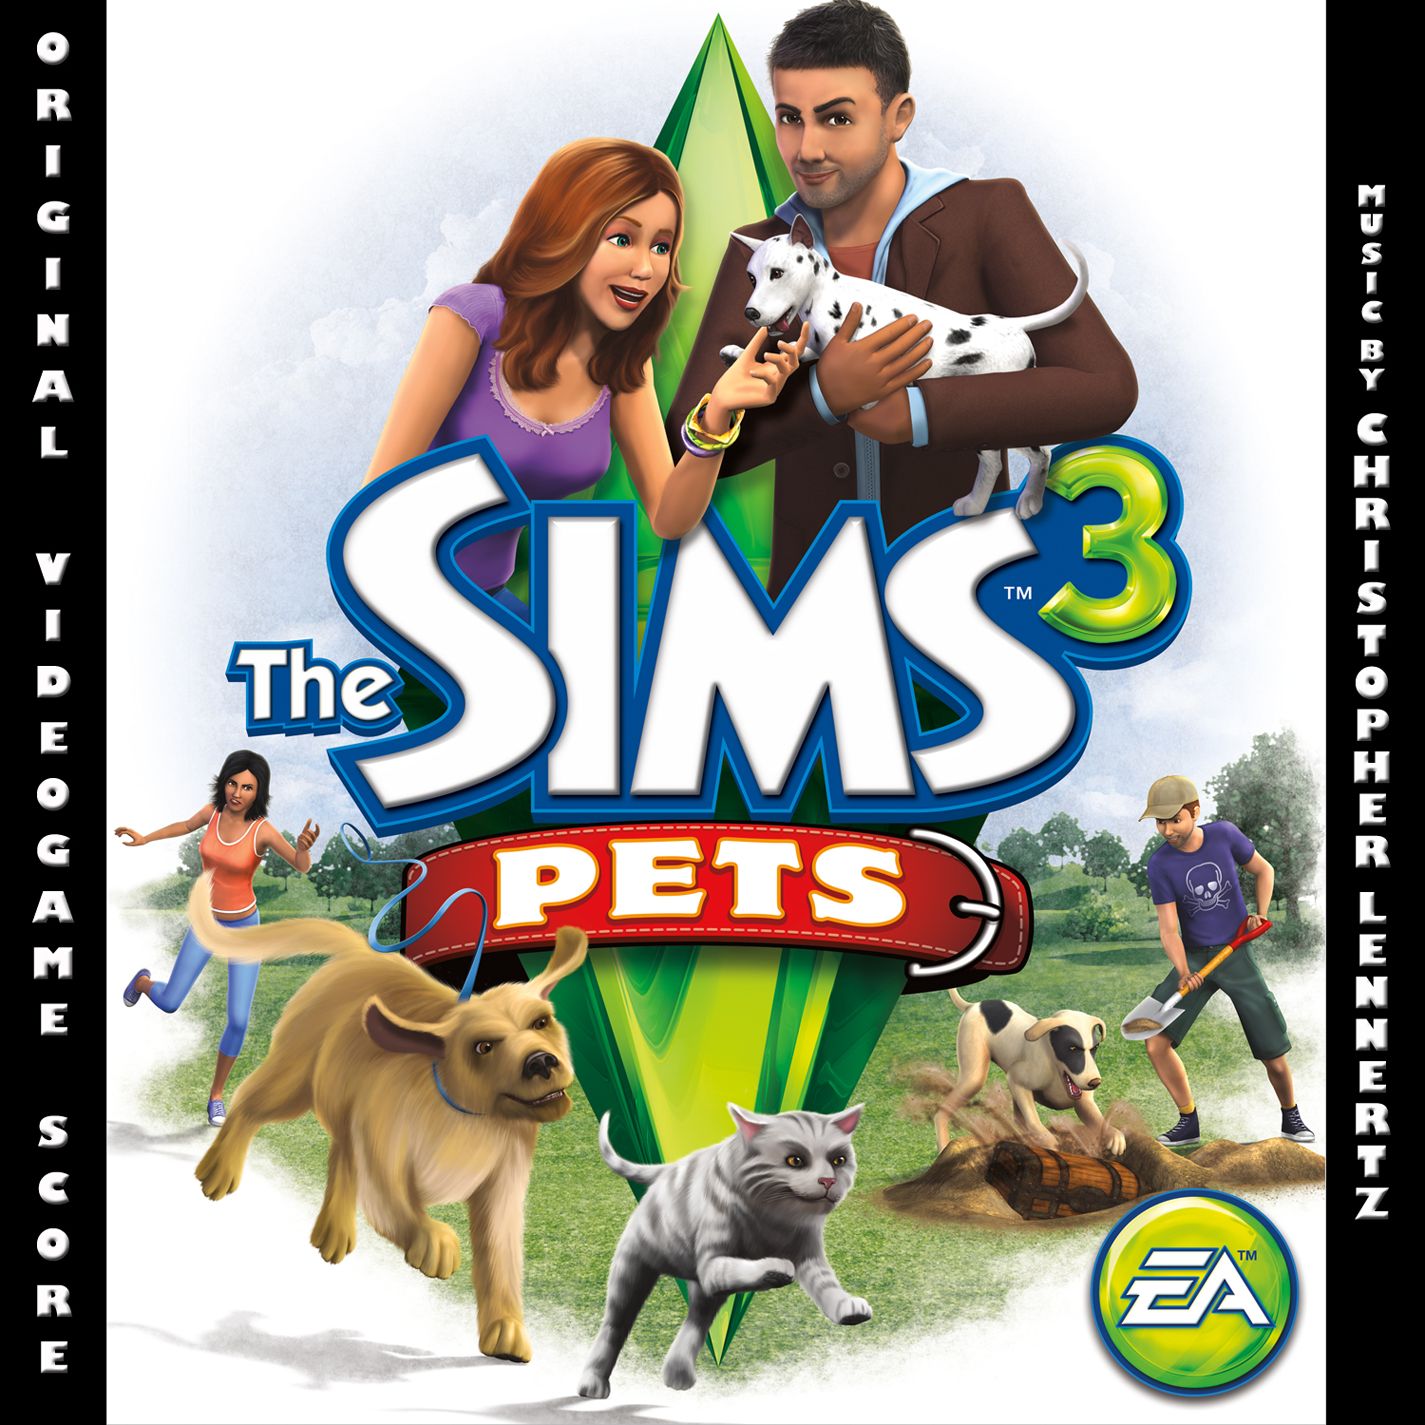 The Sims 3 Pets (Original Videogame Score)